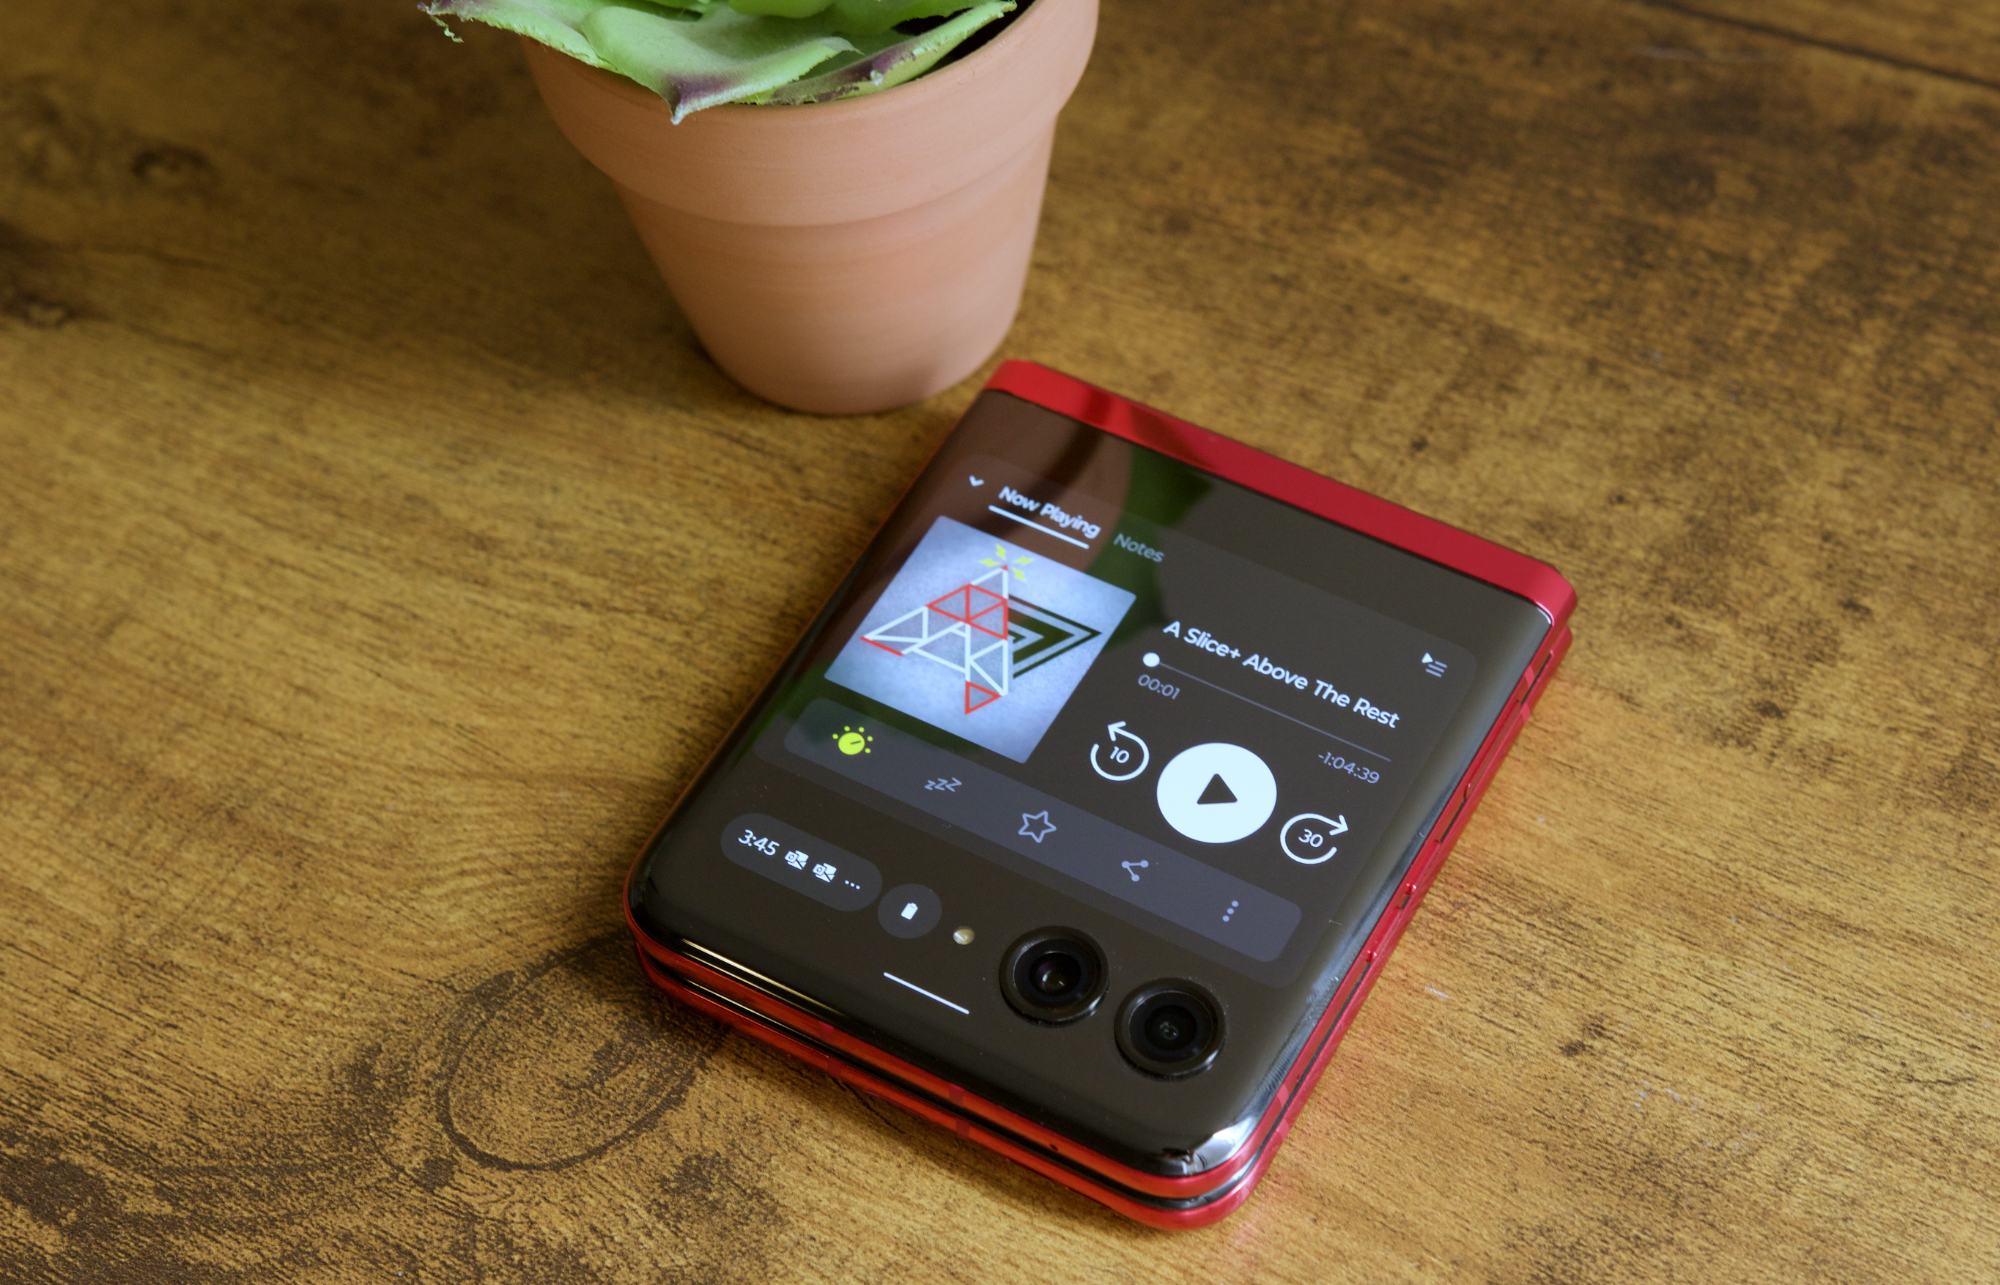 Pocket Casts app running on the Motorola Razr Plus cover screen.